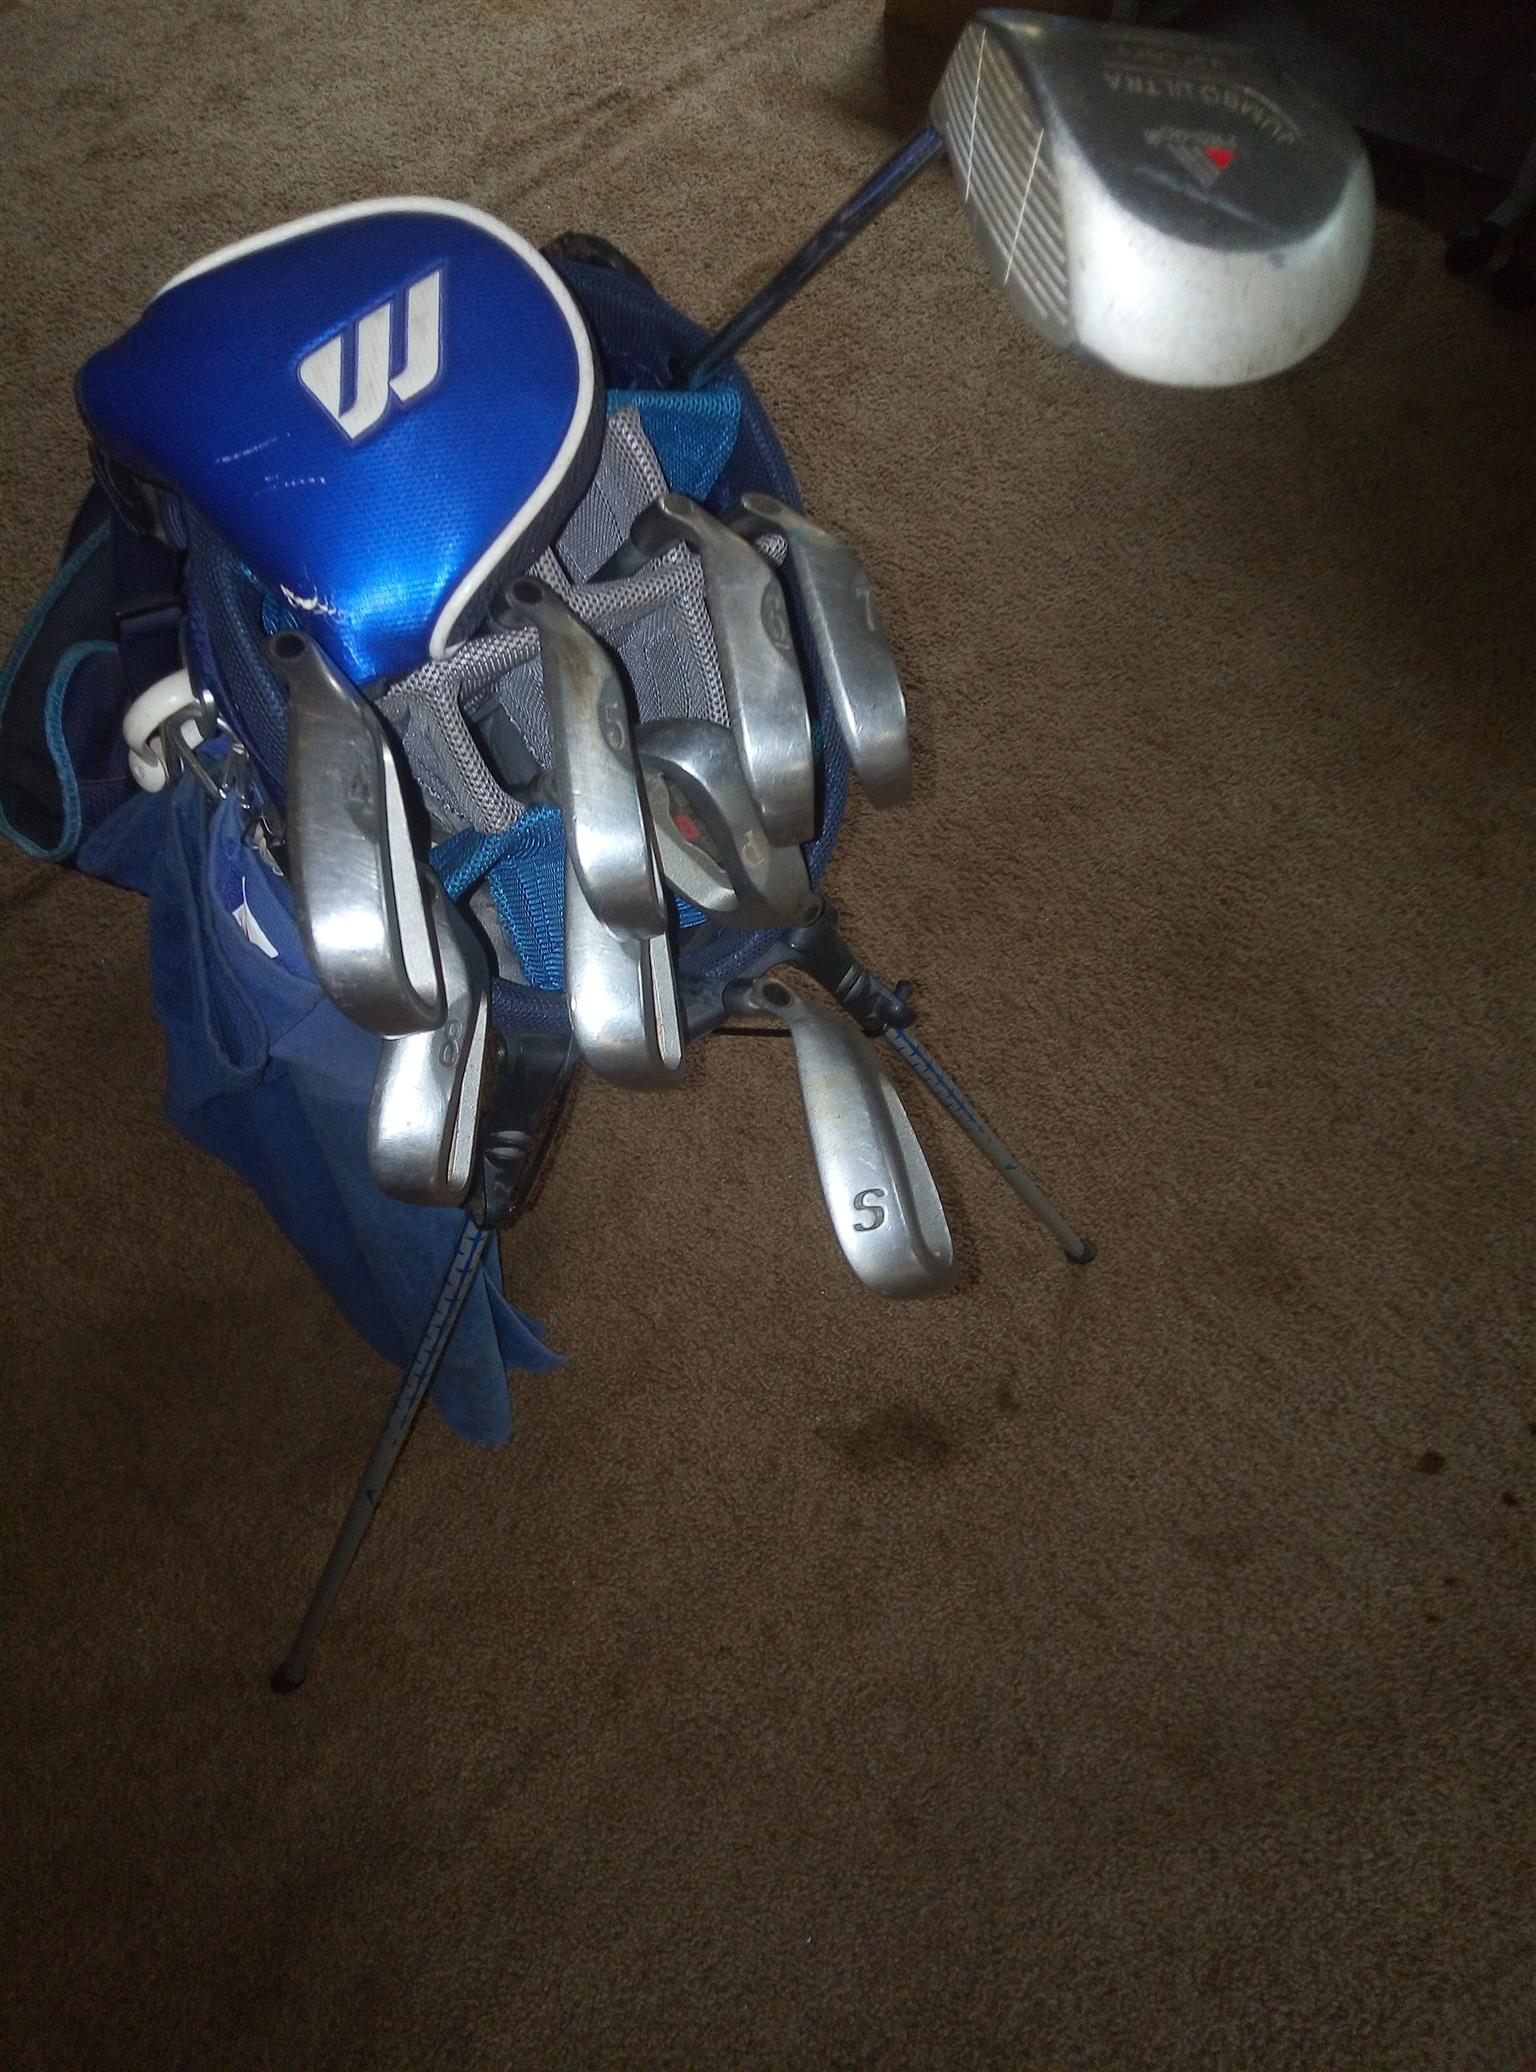  Golf bag (Nike) plus balls and clubs